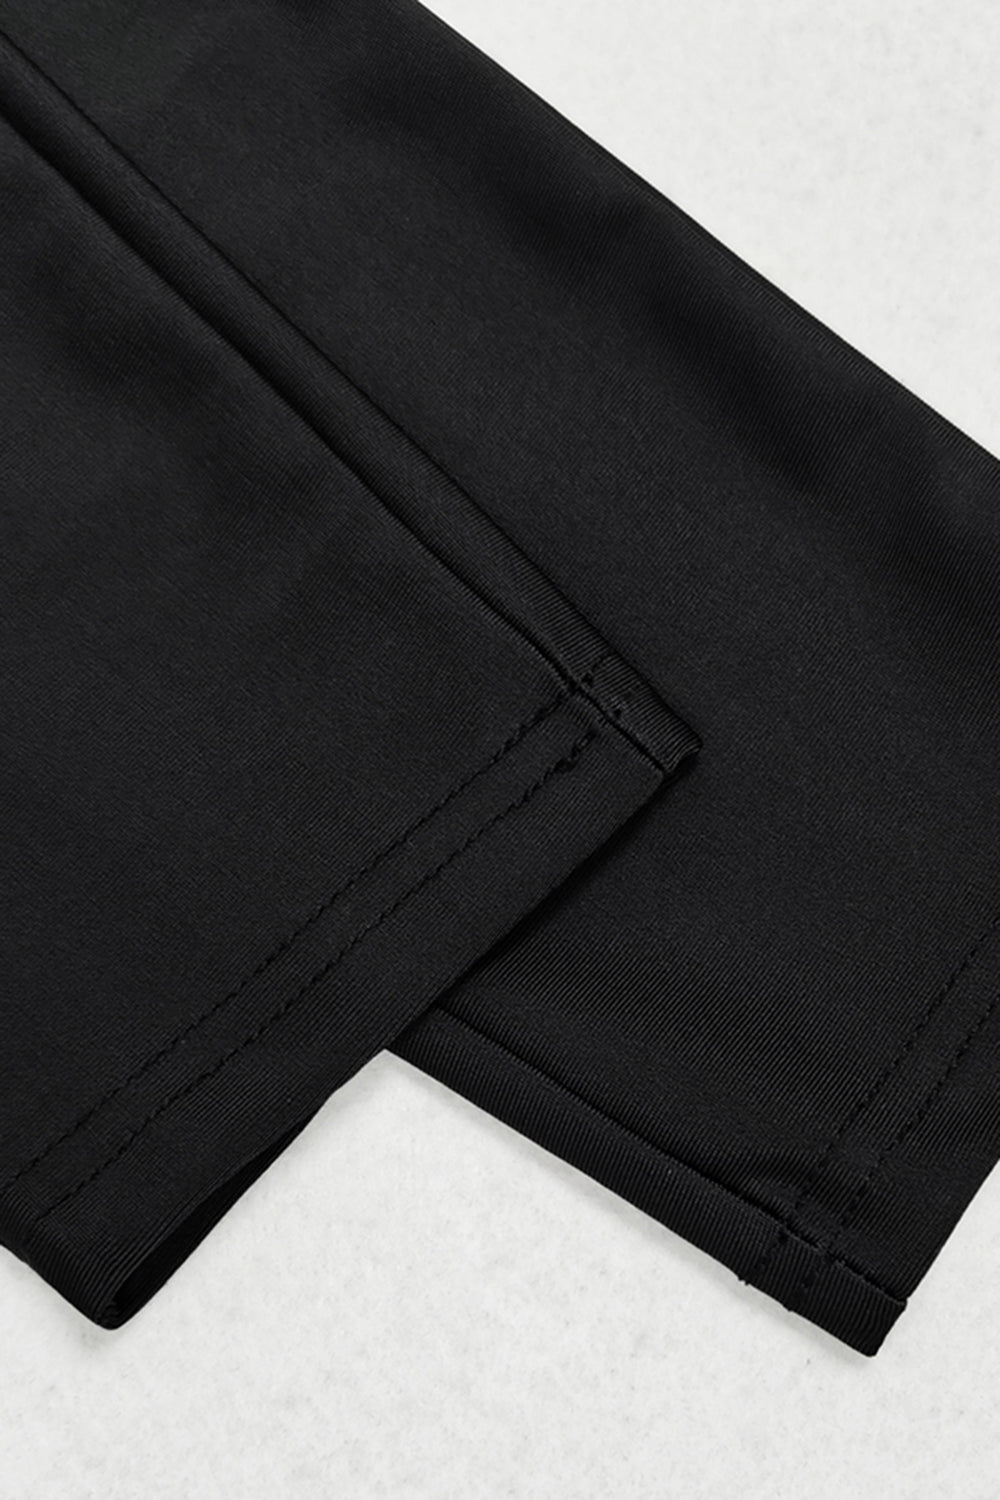 Cap, Drawstring Printed Long Sleeve Dress and Pants Swim Set - SELFTRITSS